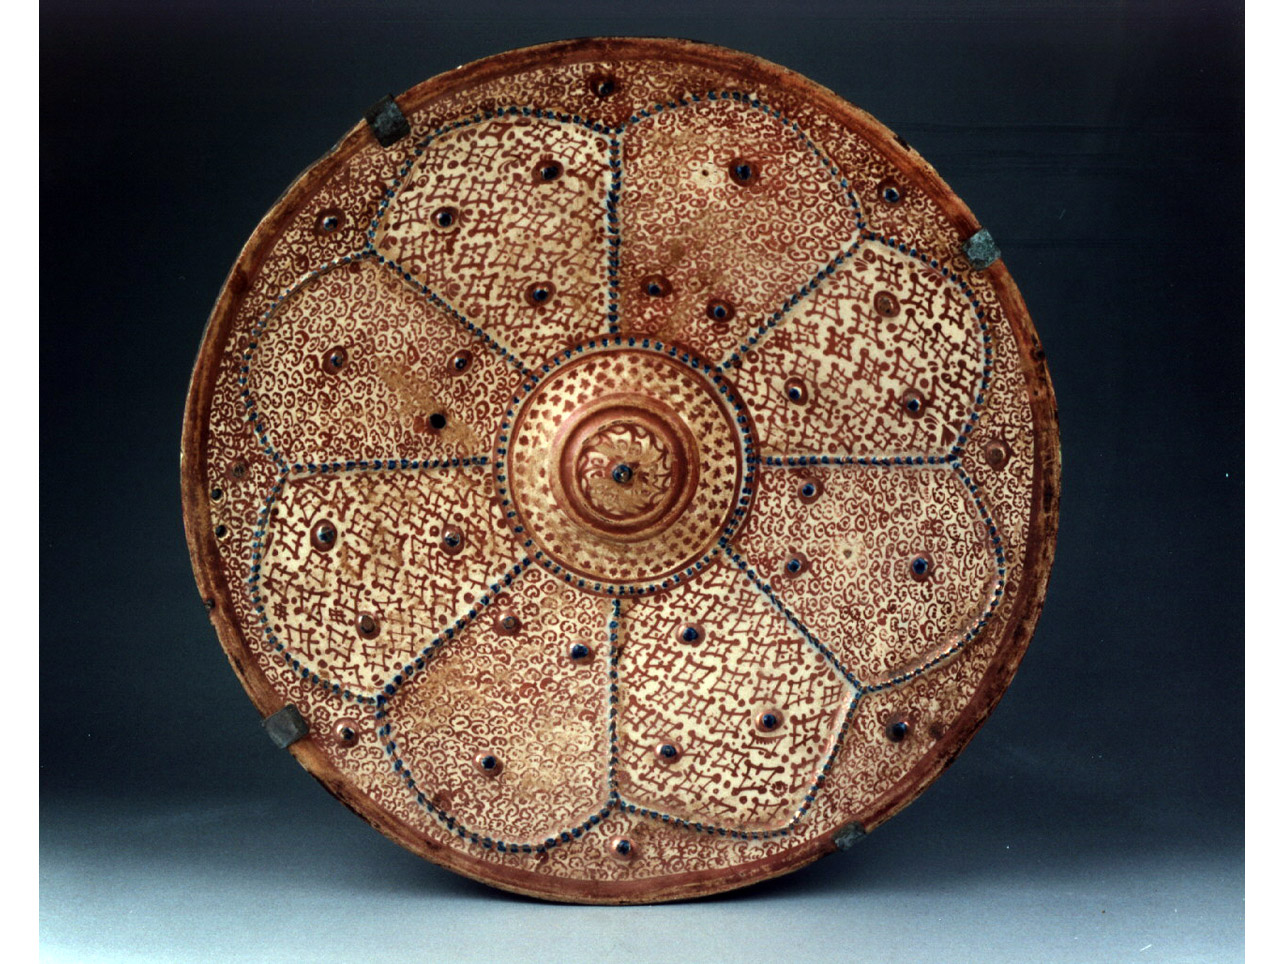 motivi decorativi floreali (piatto) - manifattura catalana (secc. XVII/ XVIII)